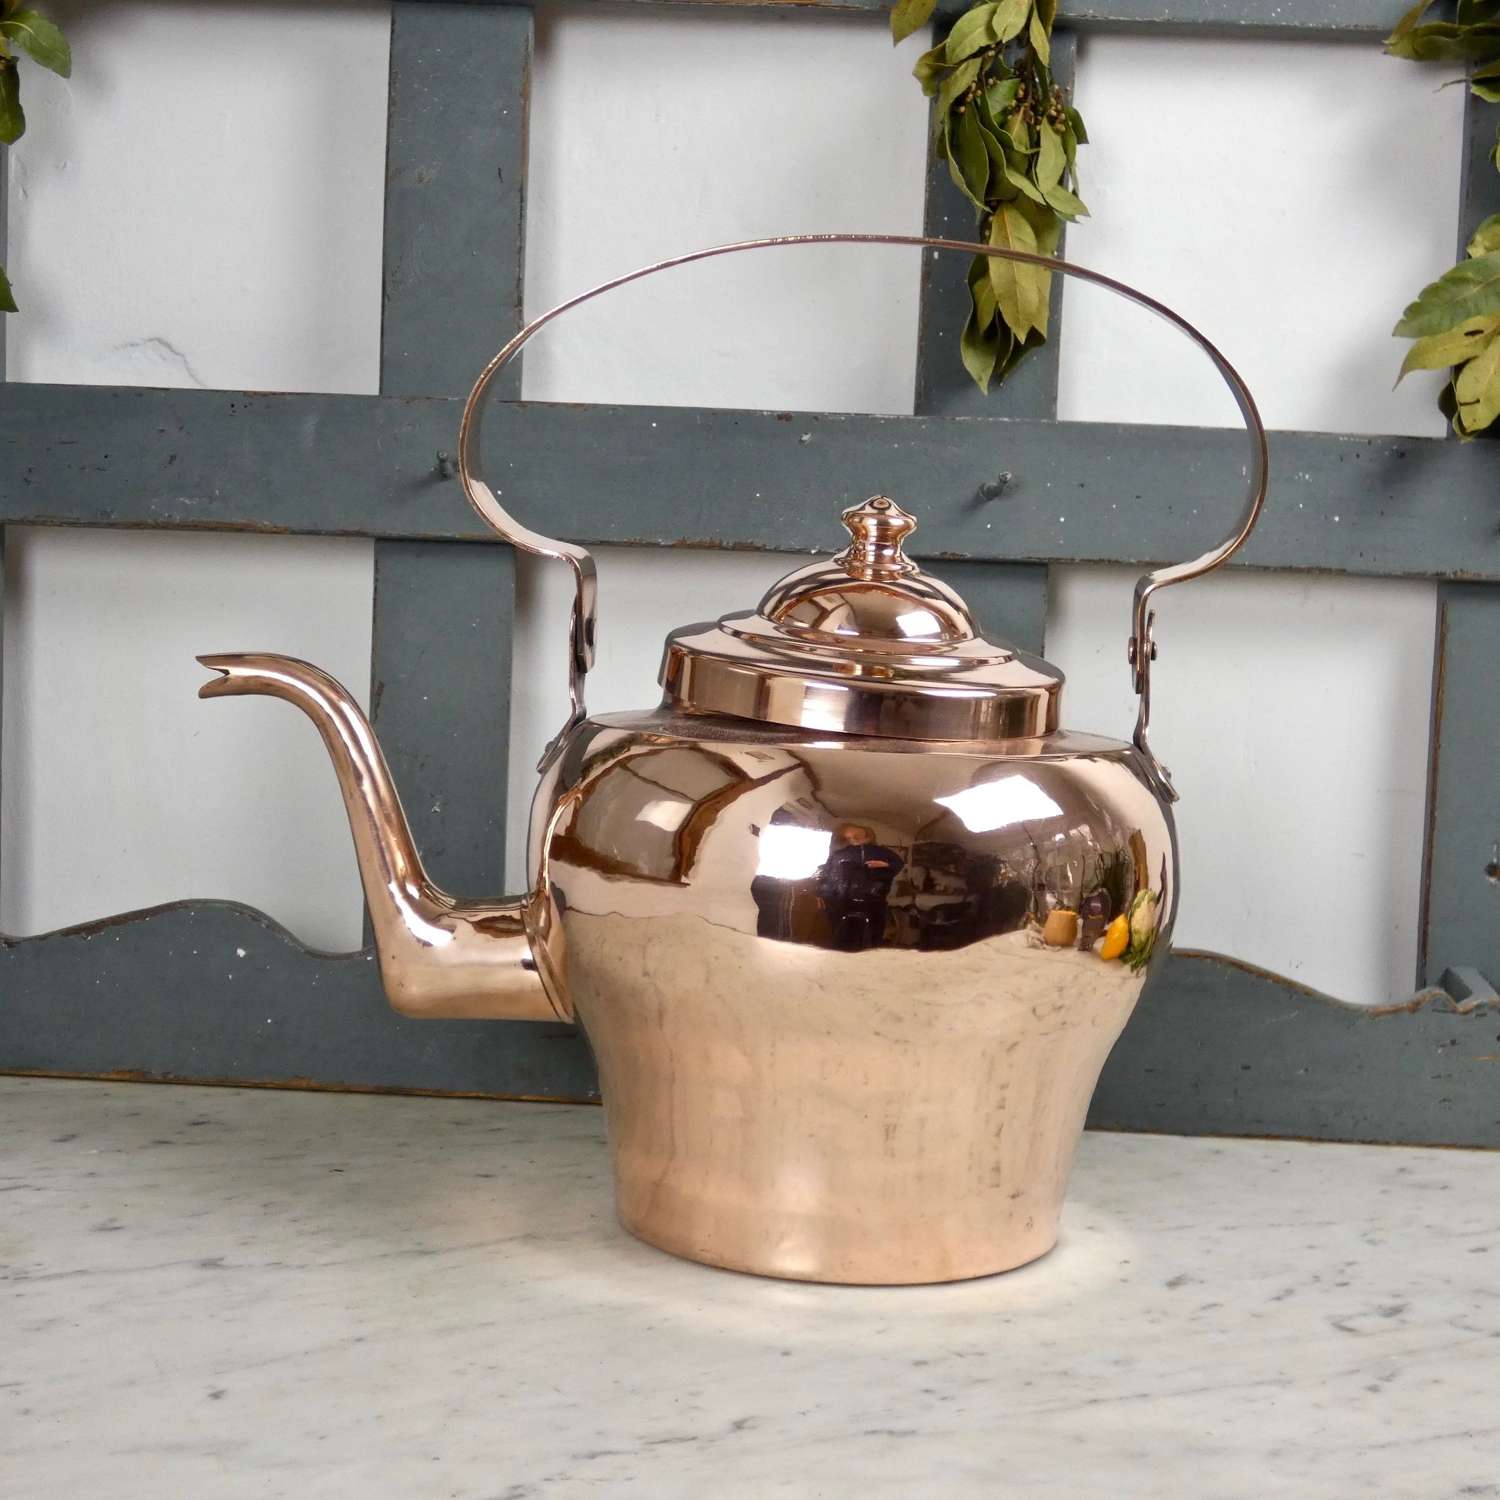 Impressive, French copper kettle